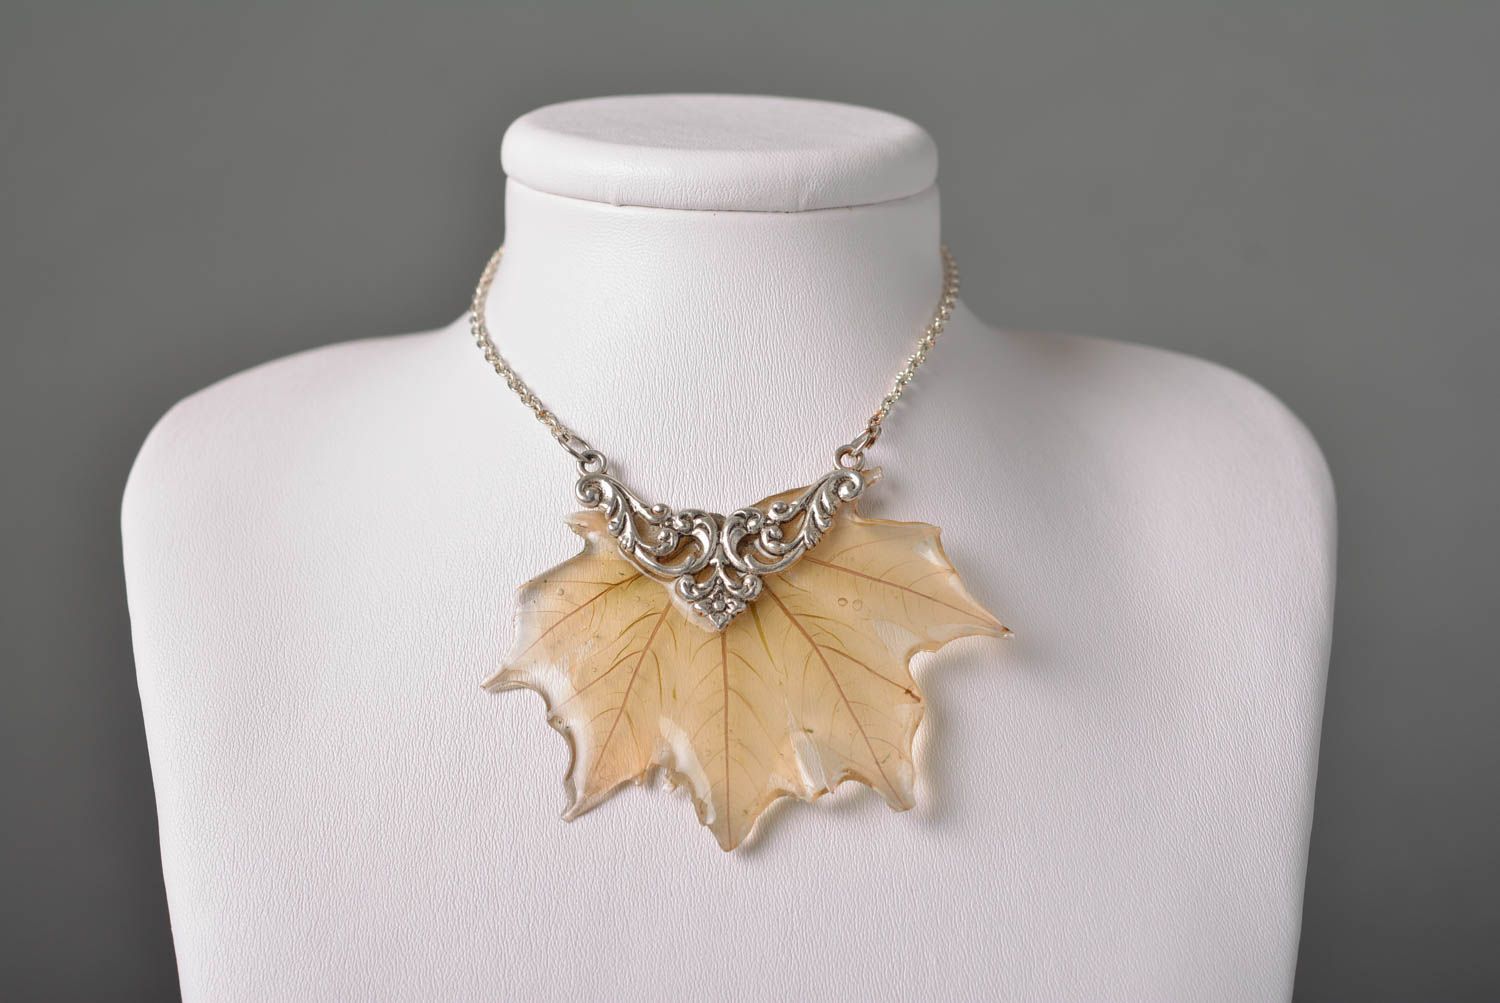 Botanic accessories handmade pendant with natural flower epoxy resin pendant photo 2